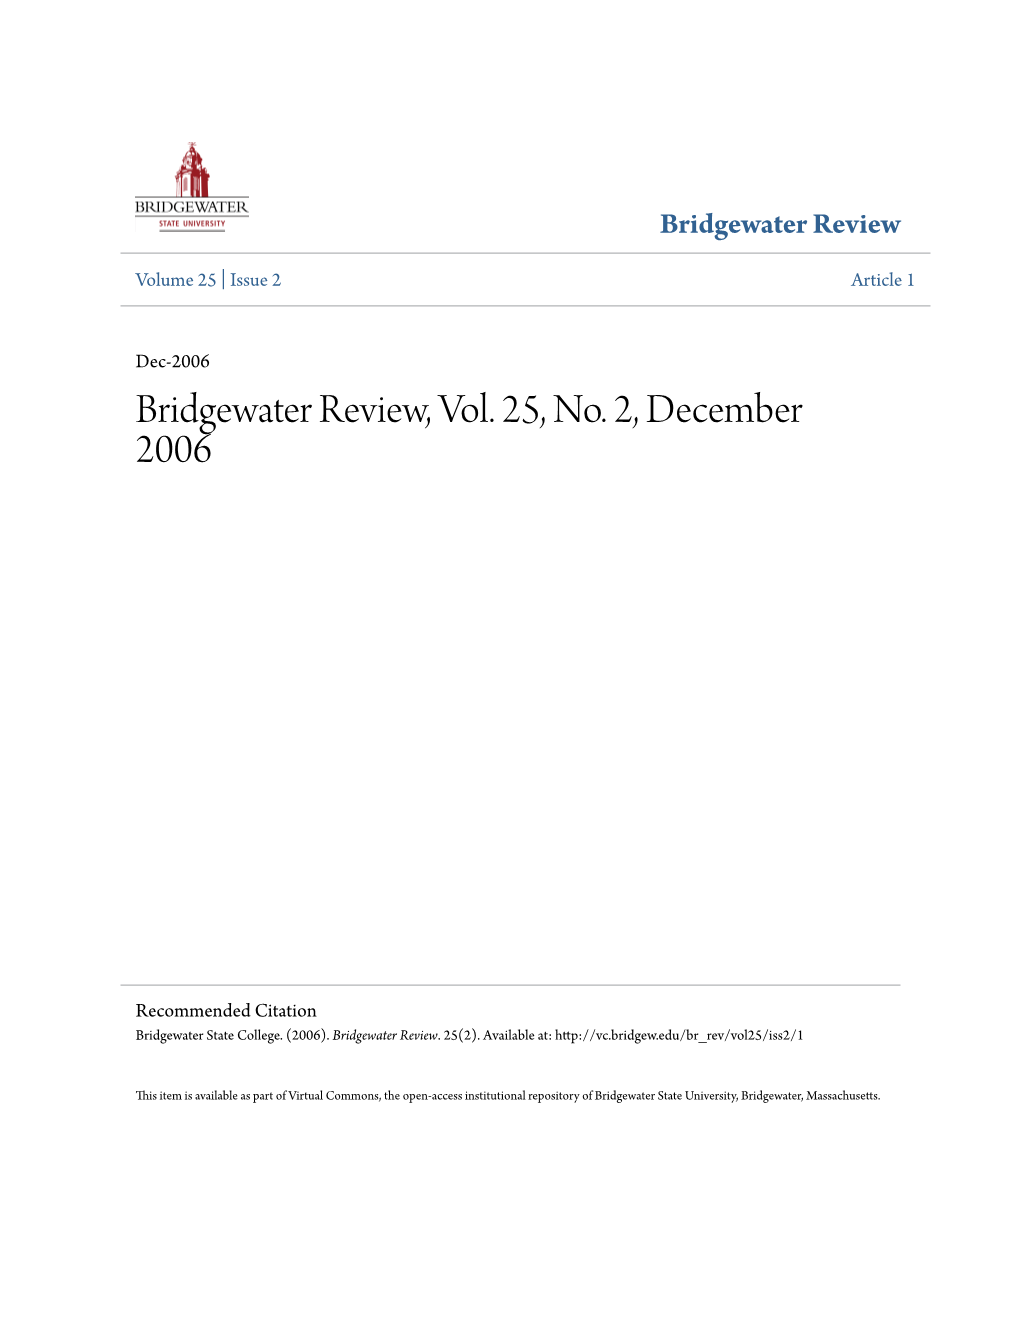 Bridgewater Review, Vol. 25, No. 2, December 2006